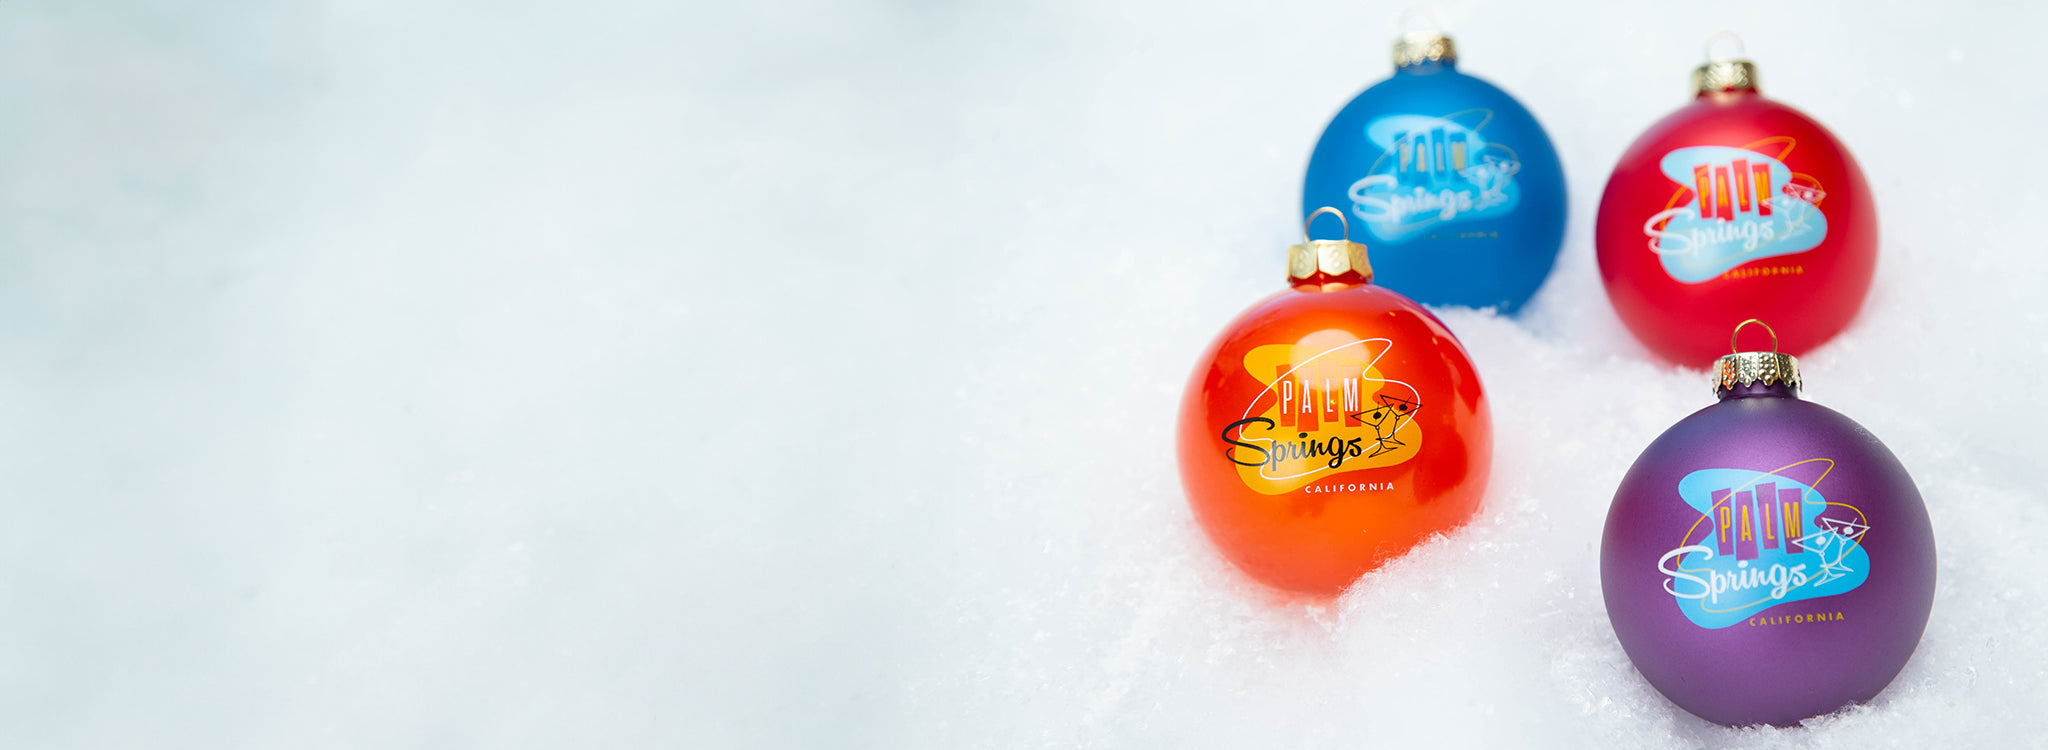 palm-springs-martini-holiday-tree-ornaments-snow.jpg